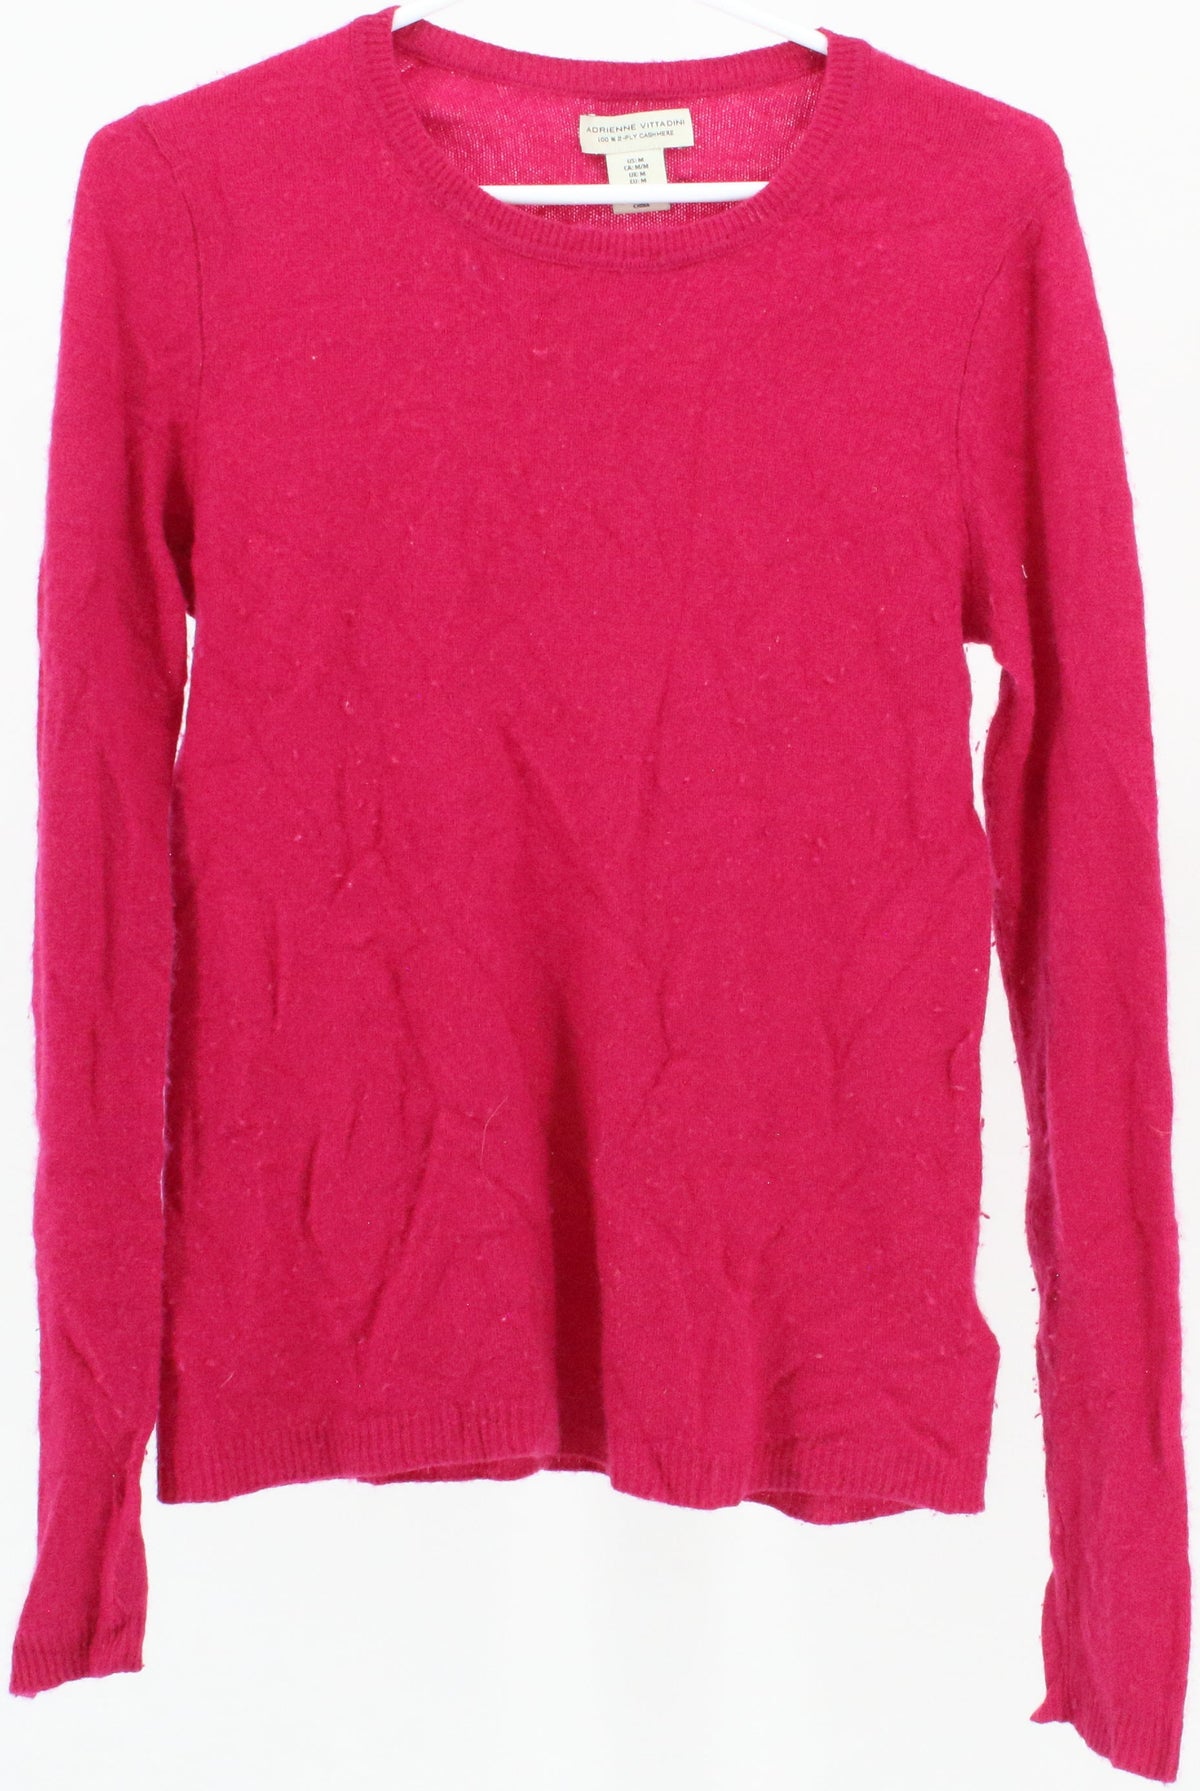 Adrienne Vittadini Pink Cashmere Sweater